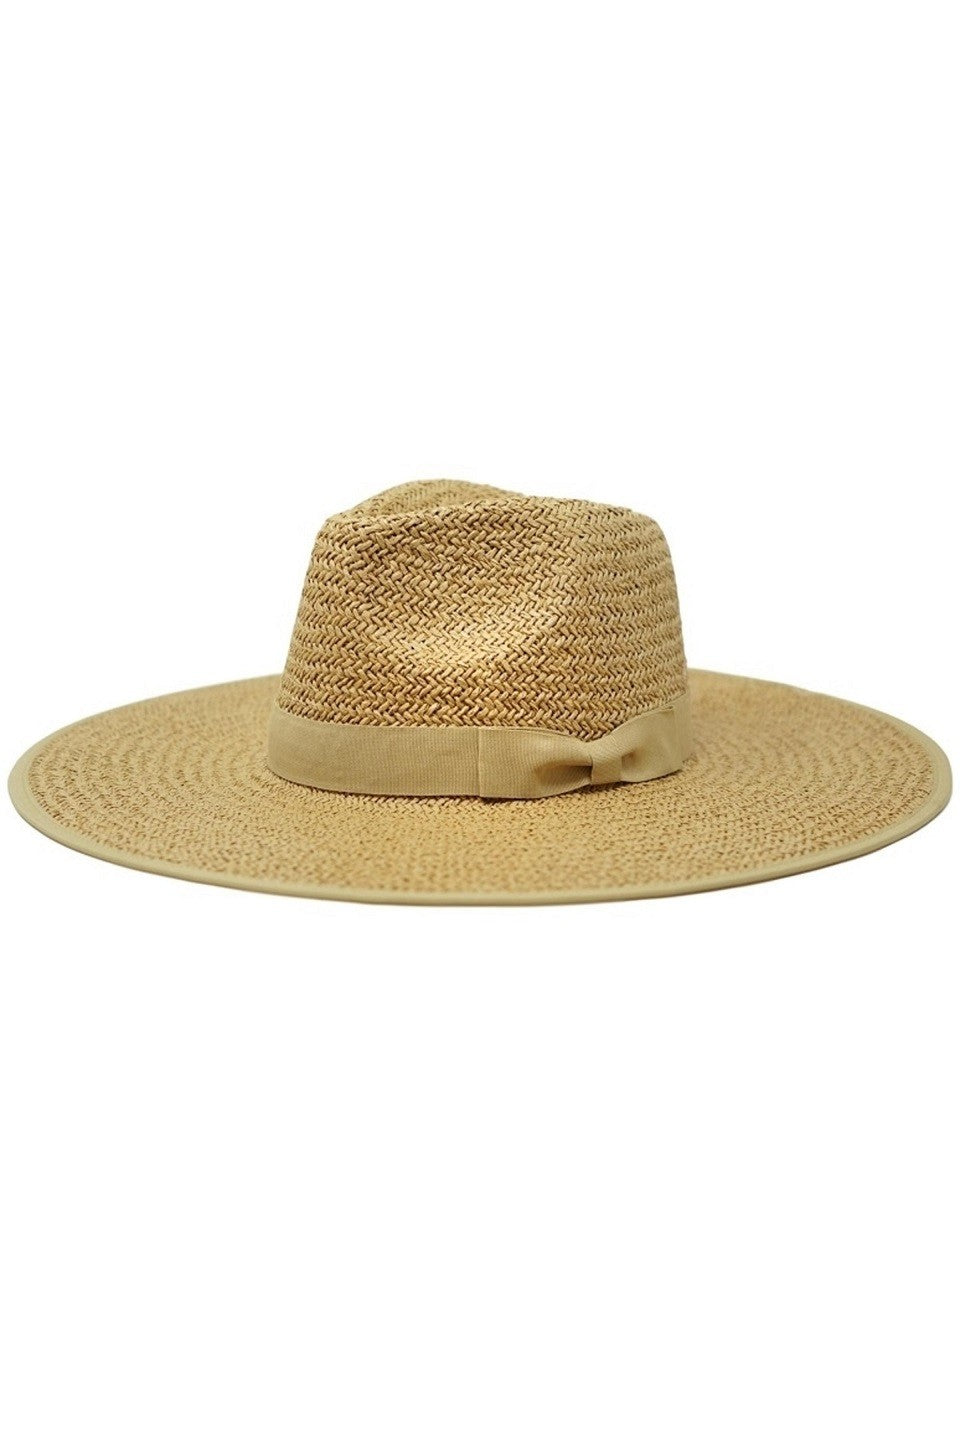 Emma Toffee Sun Hat